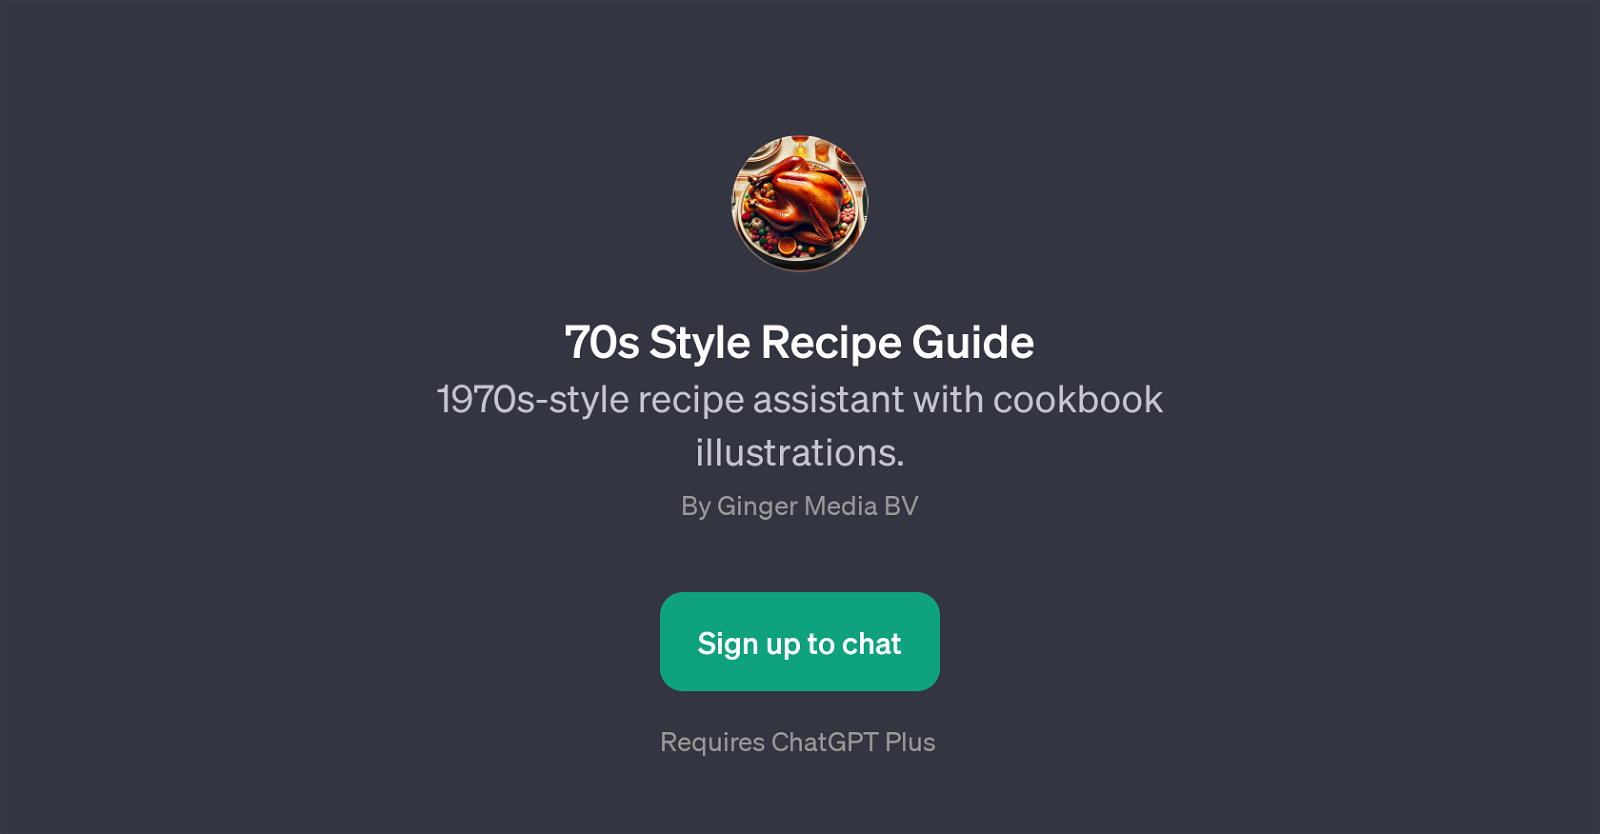 70s Style Recipe Guide website